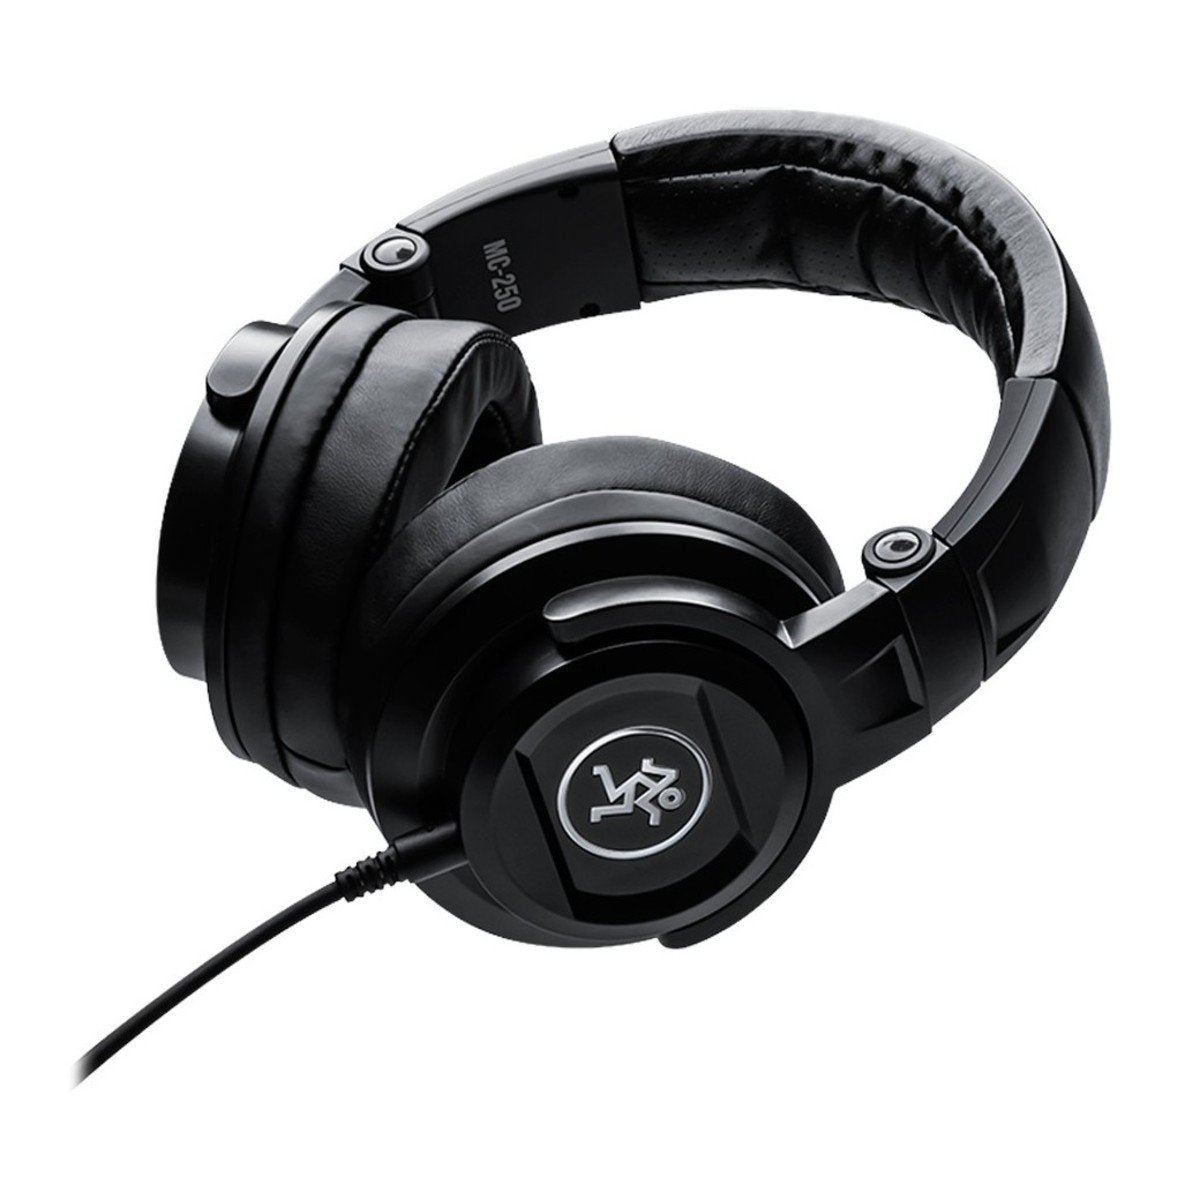 Mackie MC-250 Professional Closed-Back Headphones - DY Pro Audio